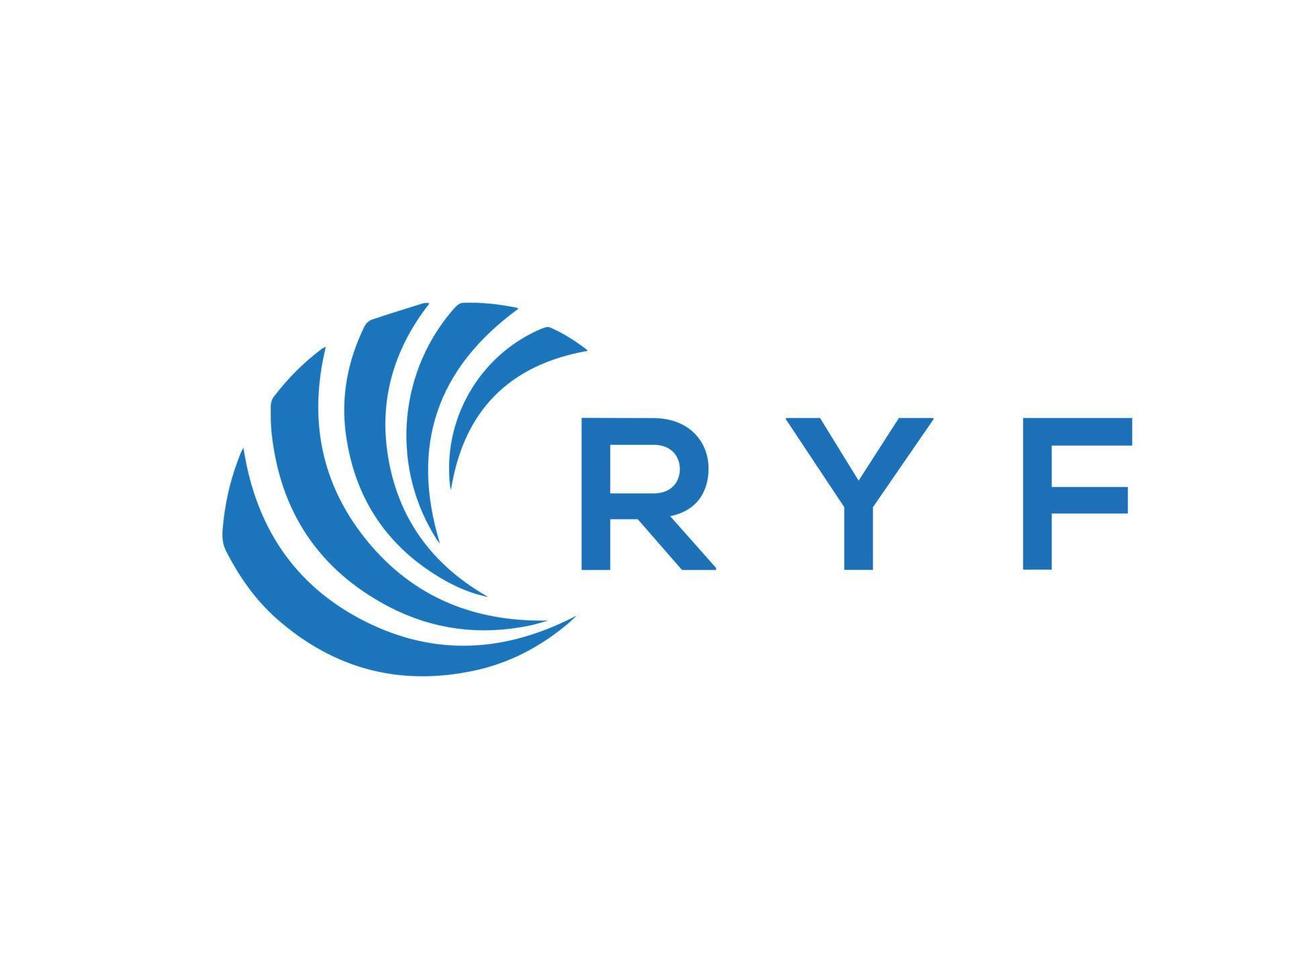 ryf letra logo diseño en blanco antecedentes. ryf creativo circulo letra logo concepto. ryf letra diseño. vector